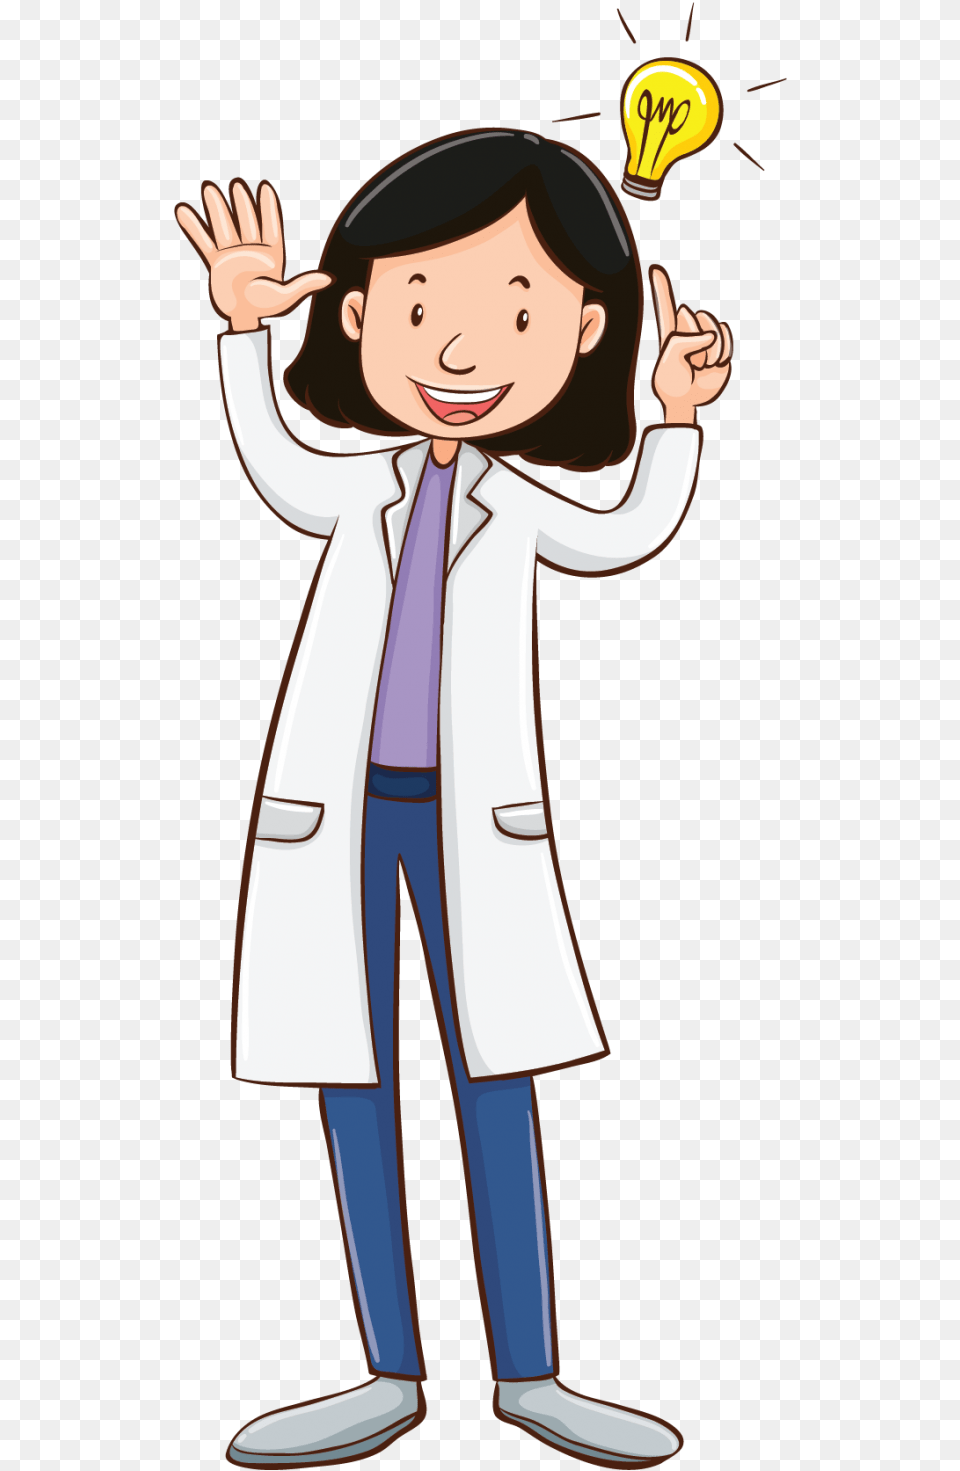 Girl Chemist Chemist Student Cartoon, Clothing, Coat, Lab Coat, Child Png Image